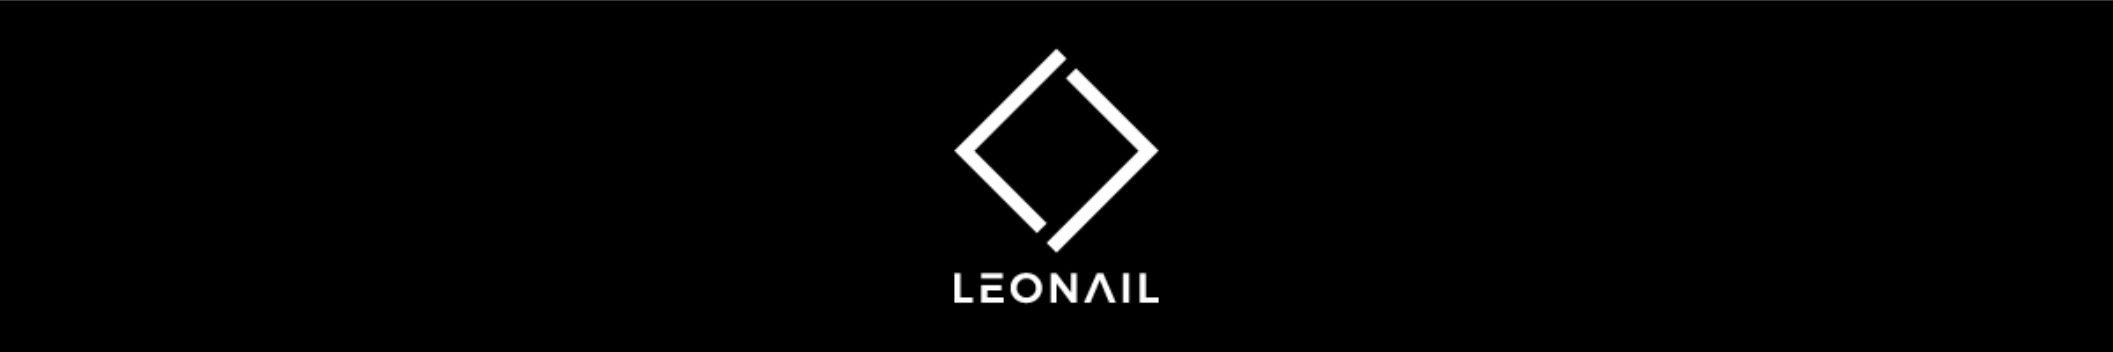 leonail